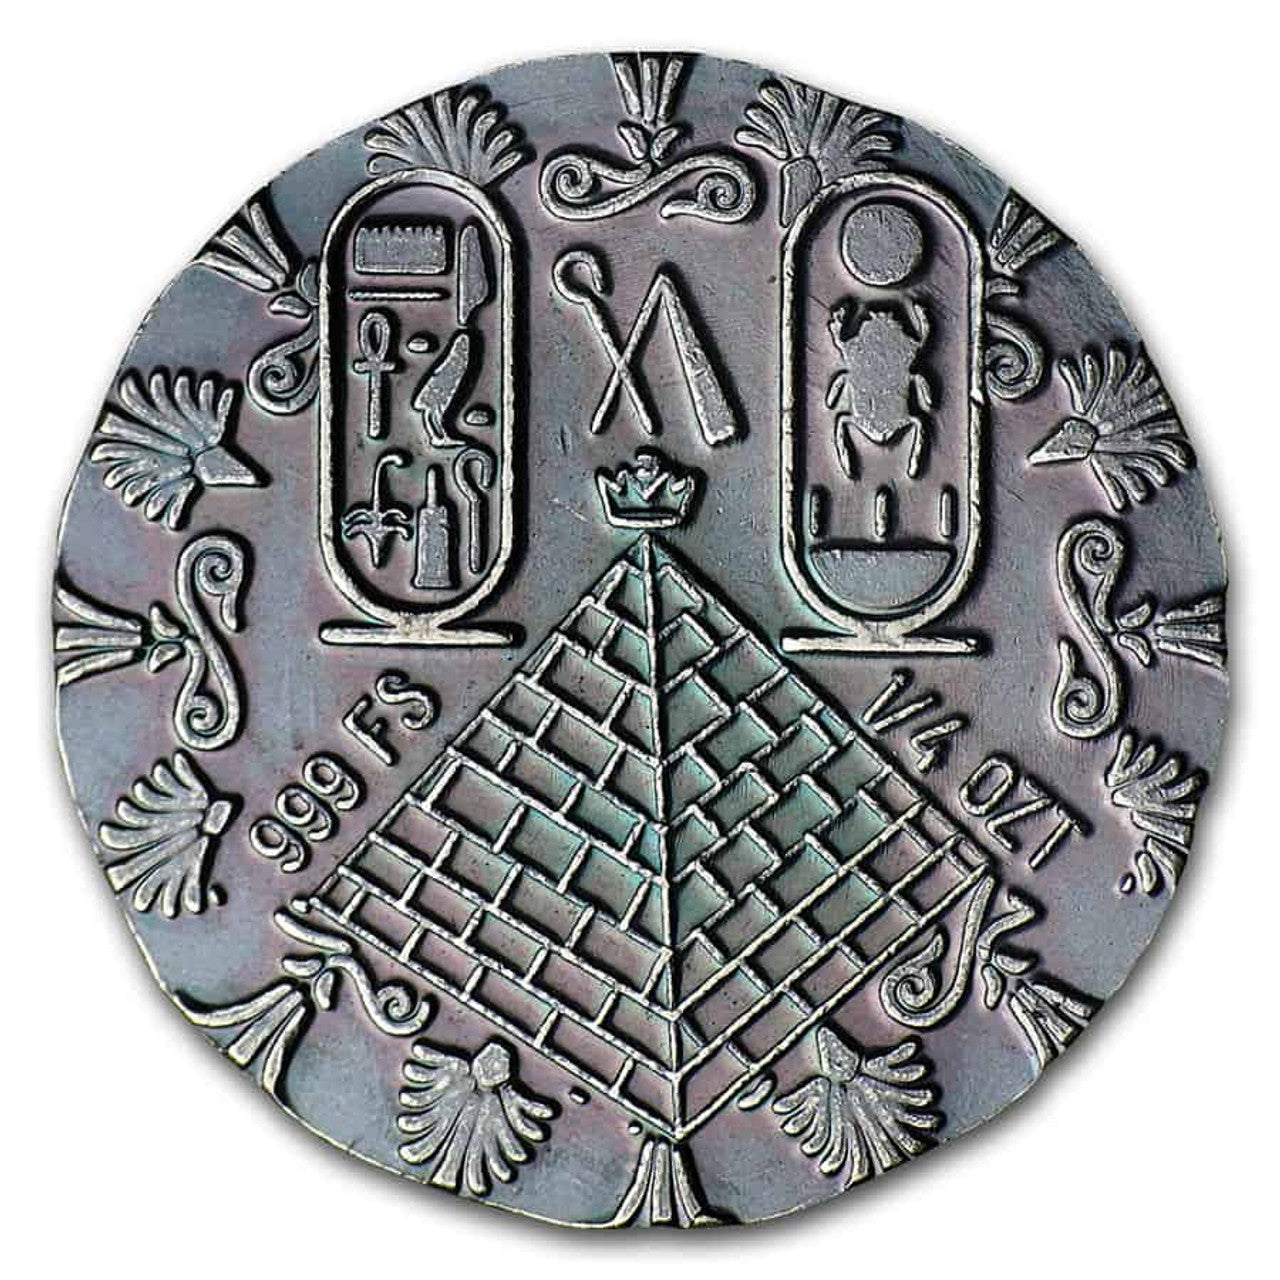 Pure Silver .999 Bullion - Egyptian King Tut Antique-style 1/4 oz round coin